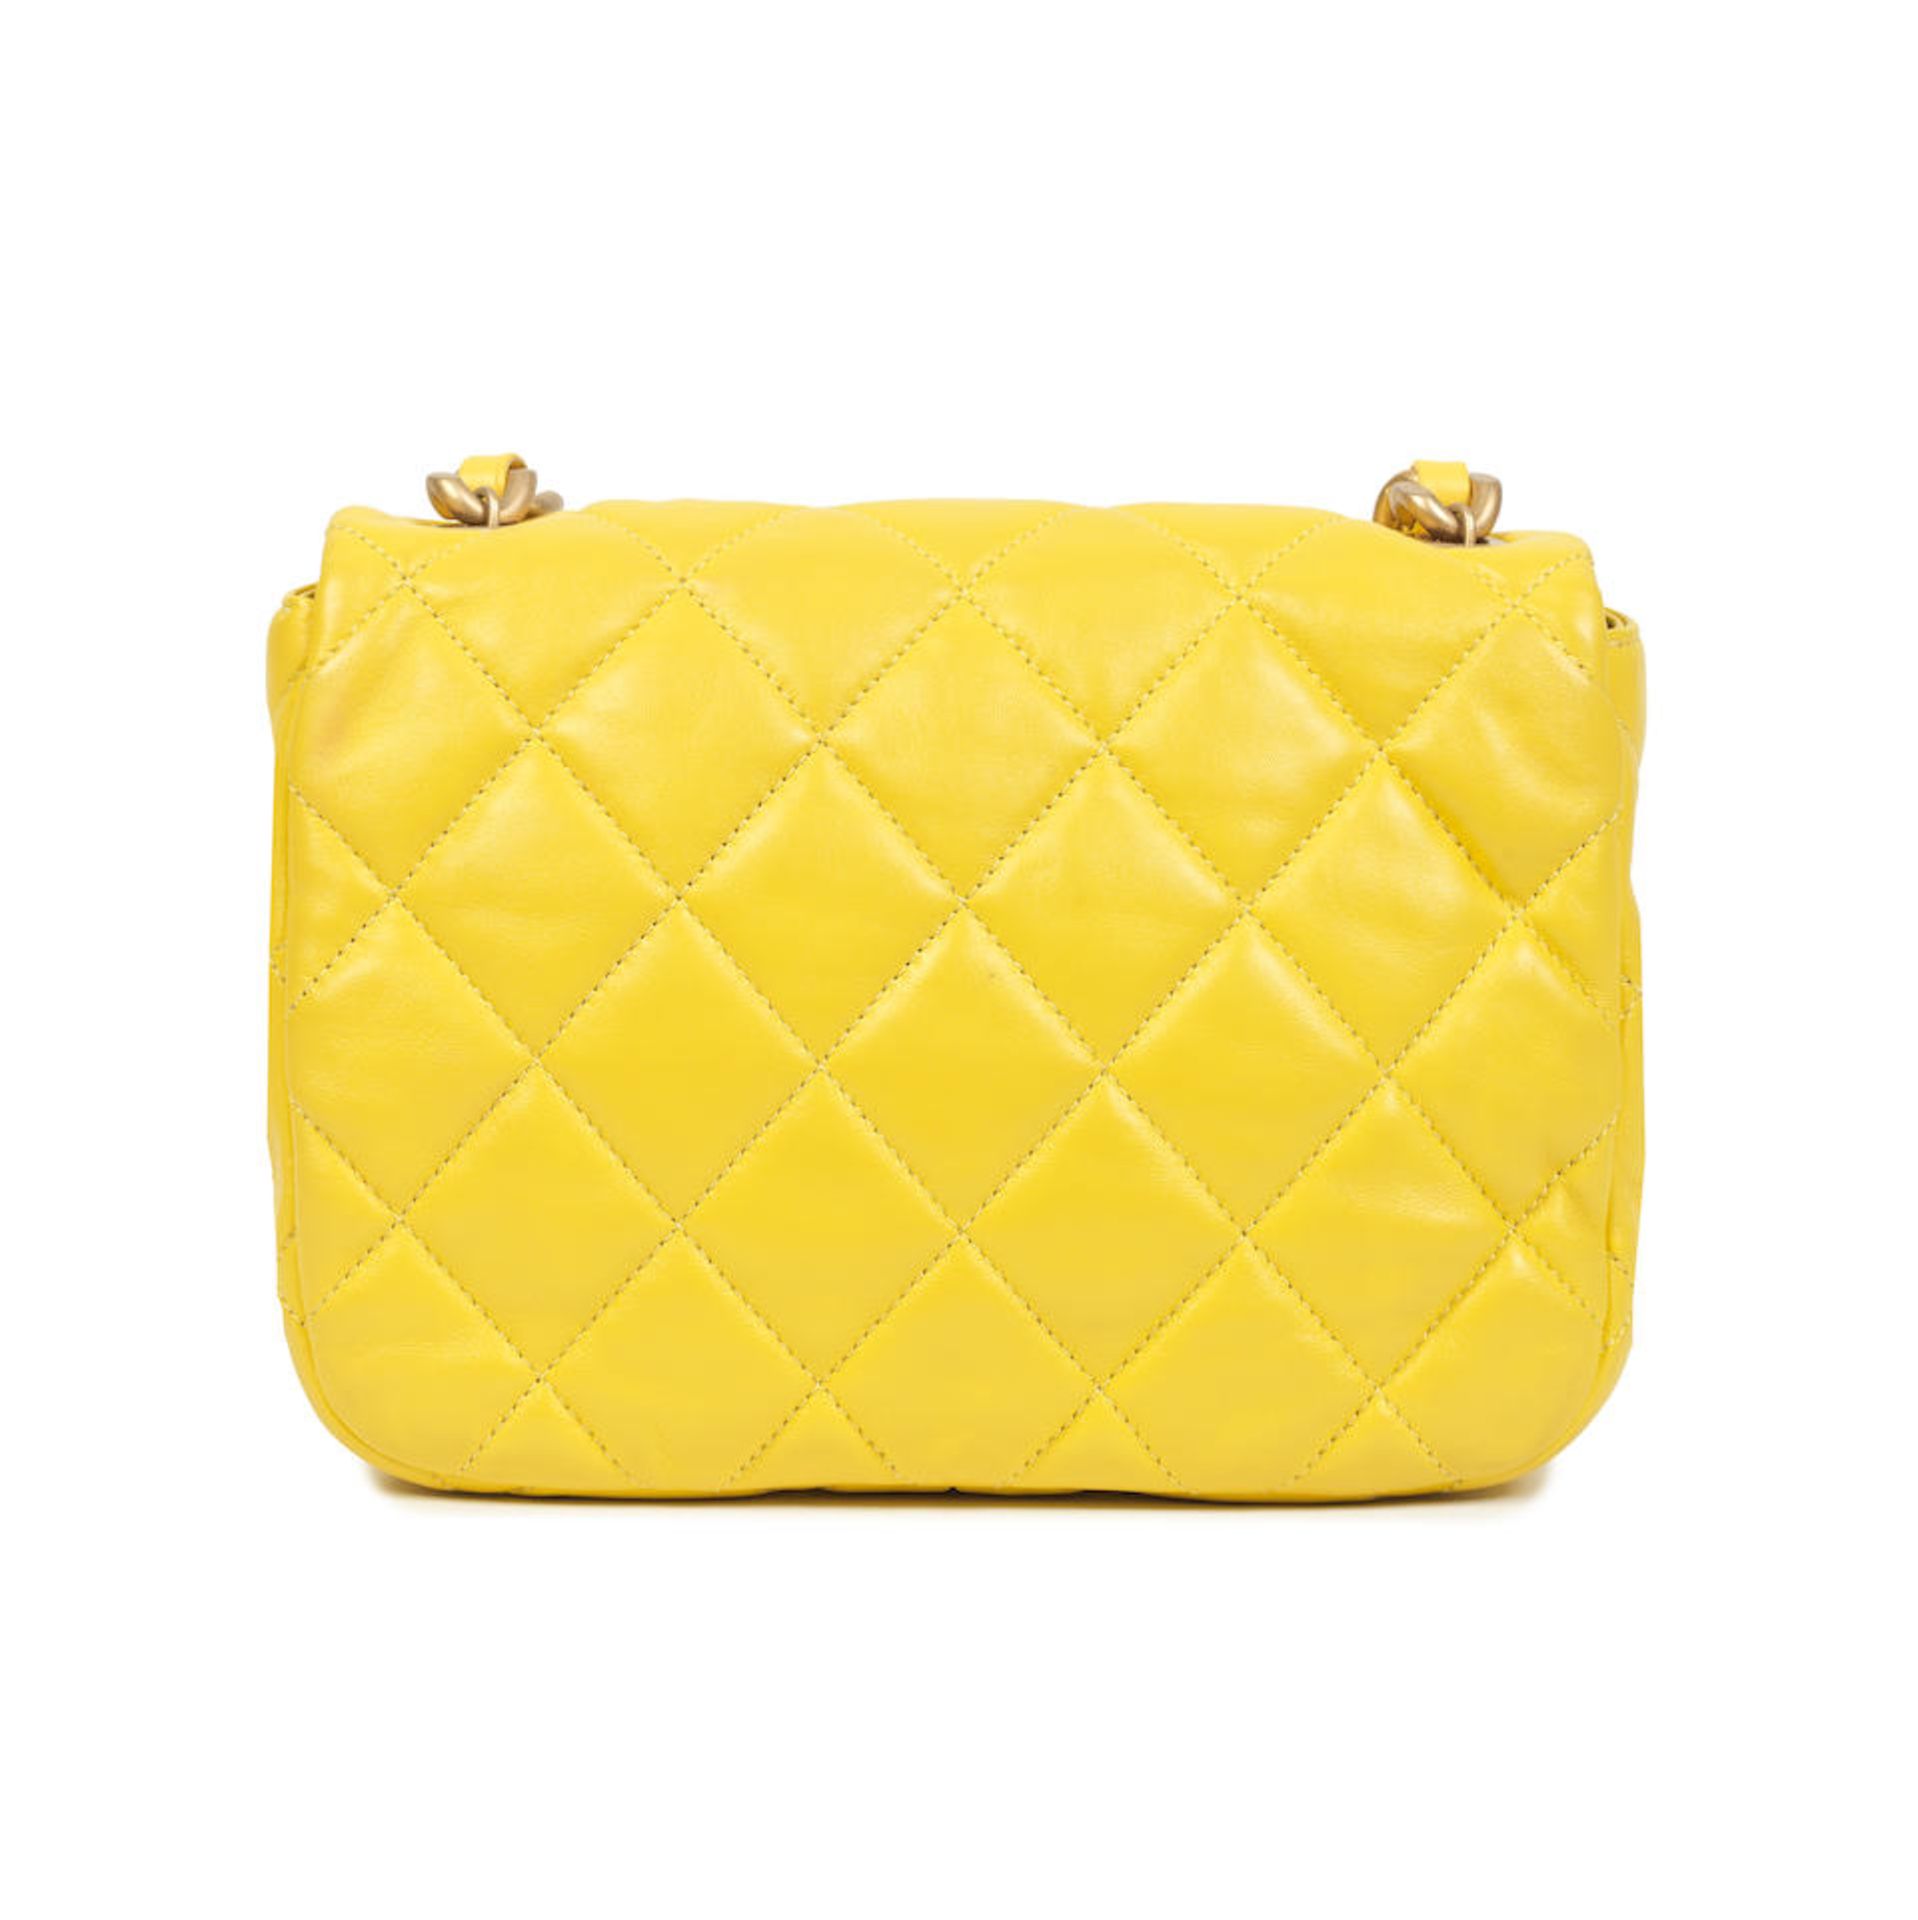 Virginie Viard for Chanel: a Yellow Quilted Lambskin Mini Flap Bag Spring/Summer 2022 - Bild 2 aus 3